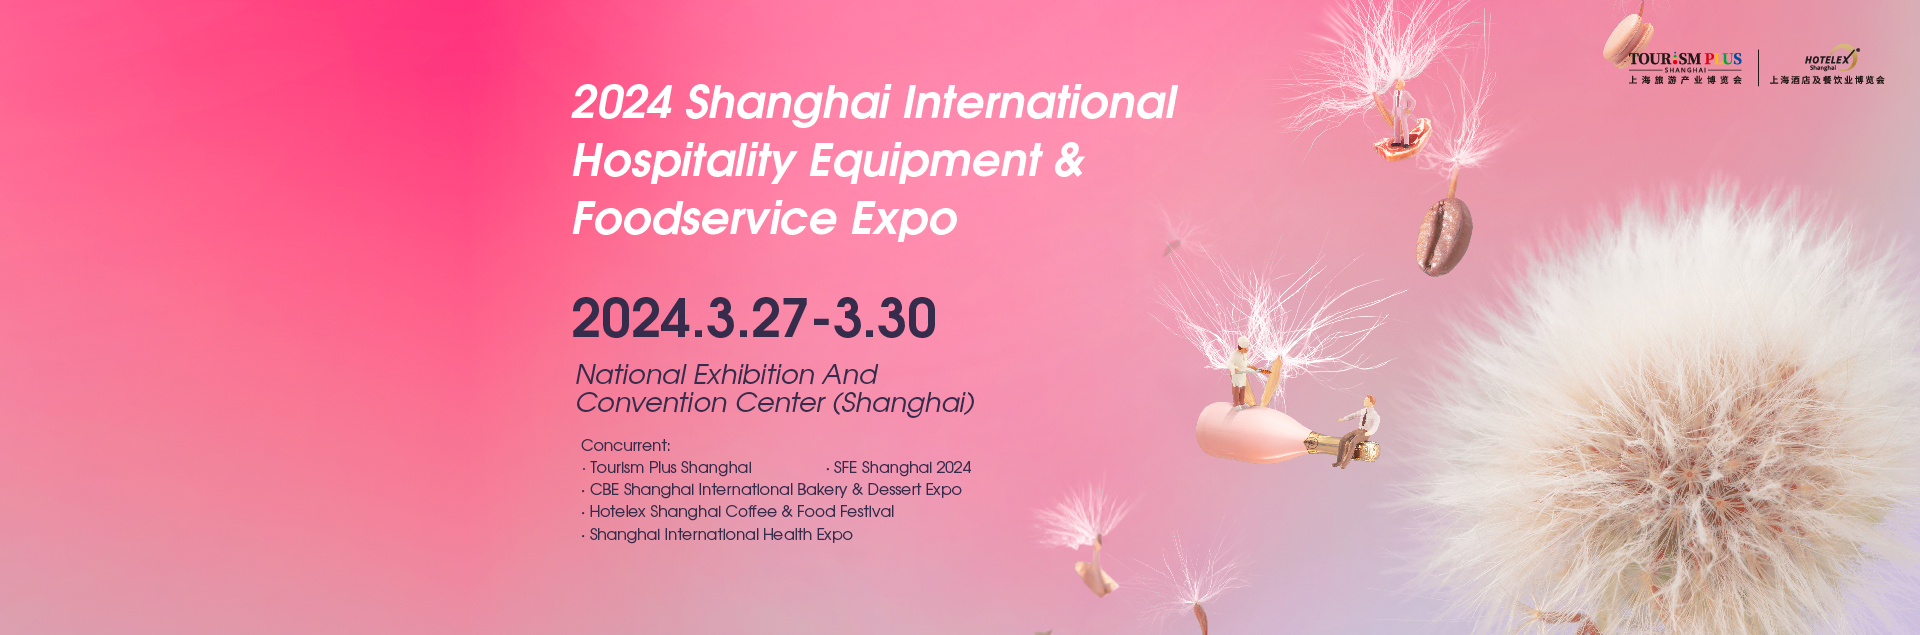 2024 Shanghai International Hospitality Equipment & Foodservice Expo